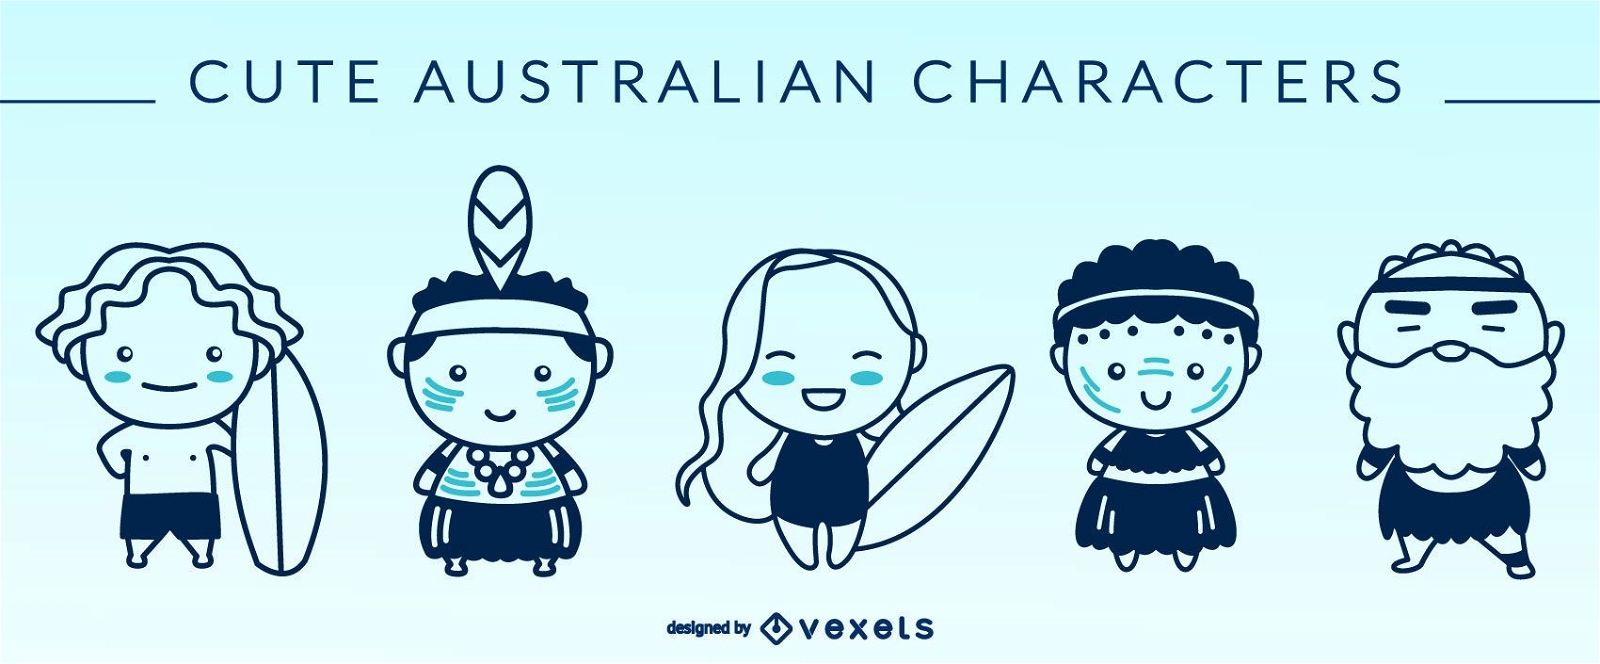 Cute australian characters silhouettes